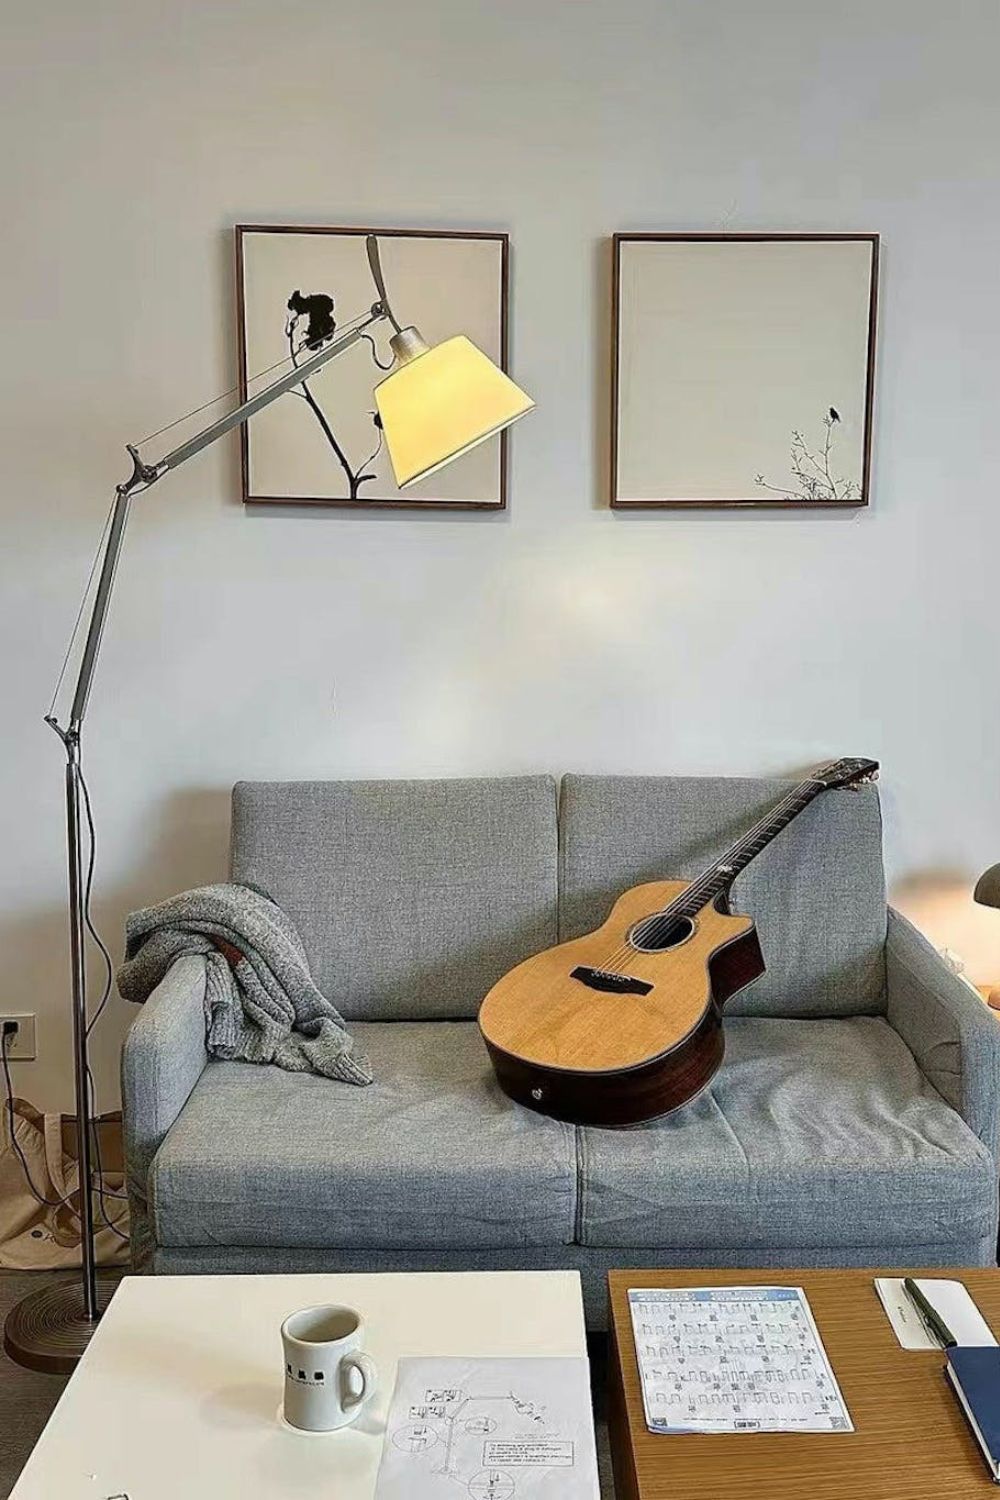 Tolomeo Floor Lamp - SamuLighting